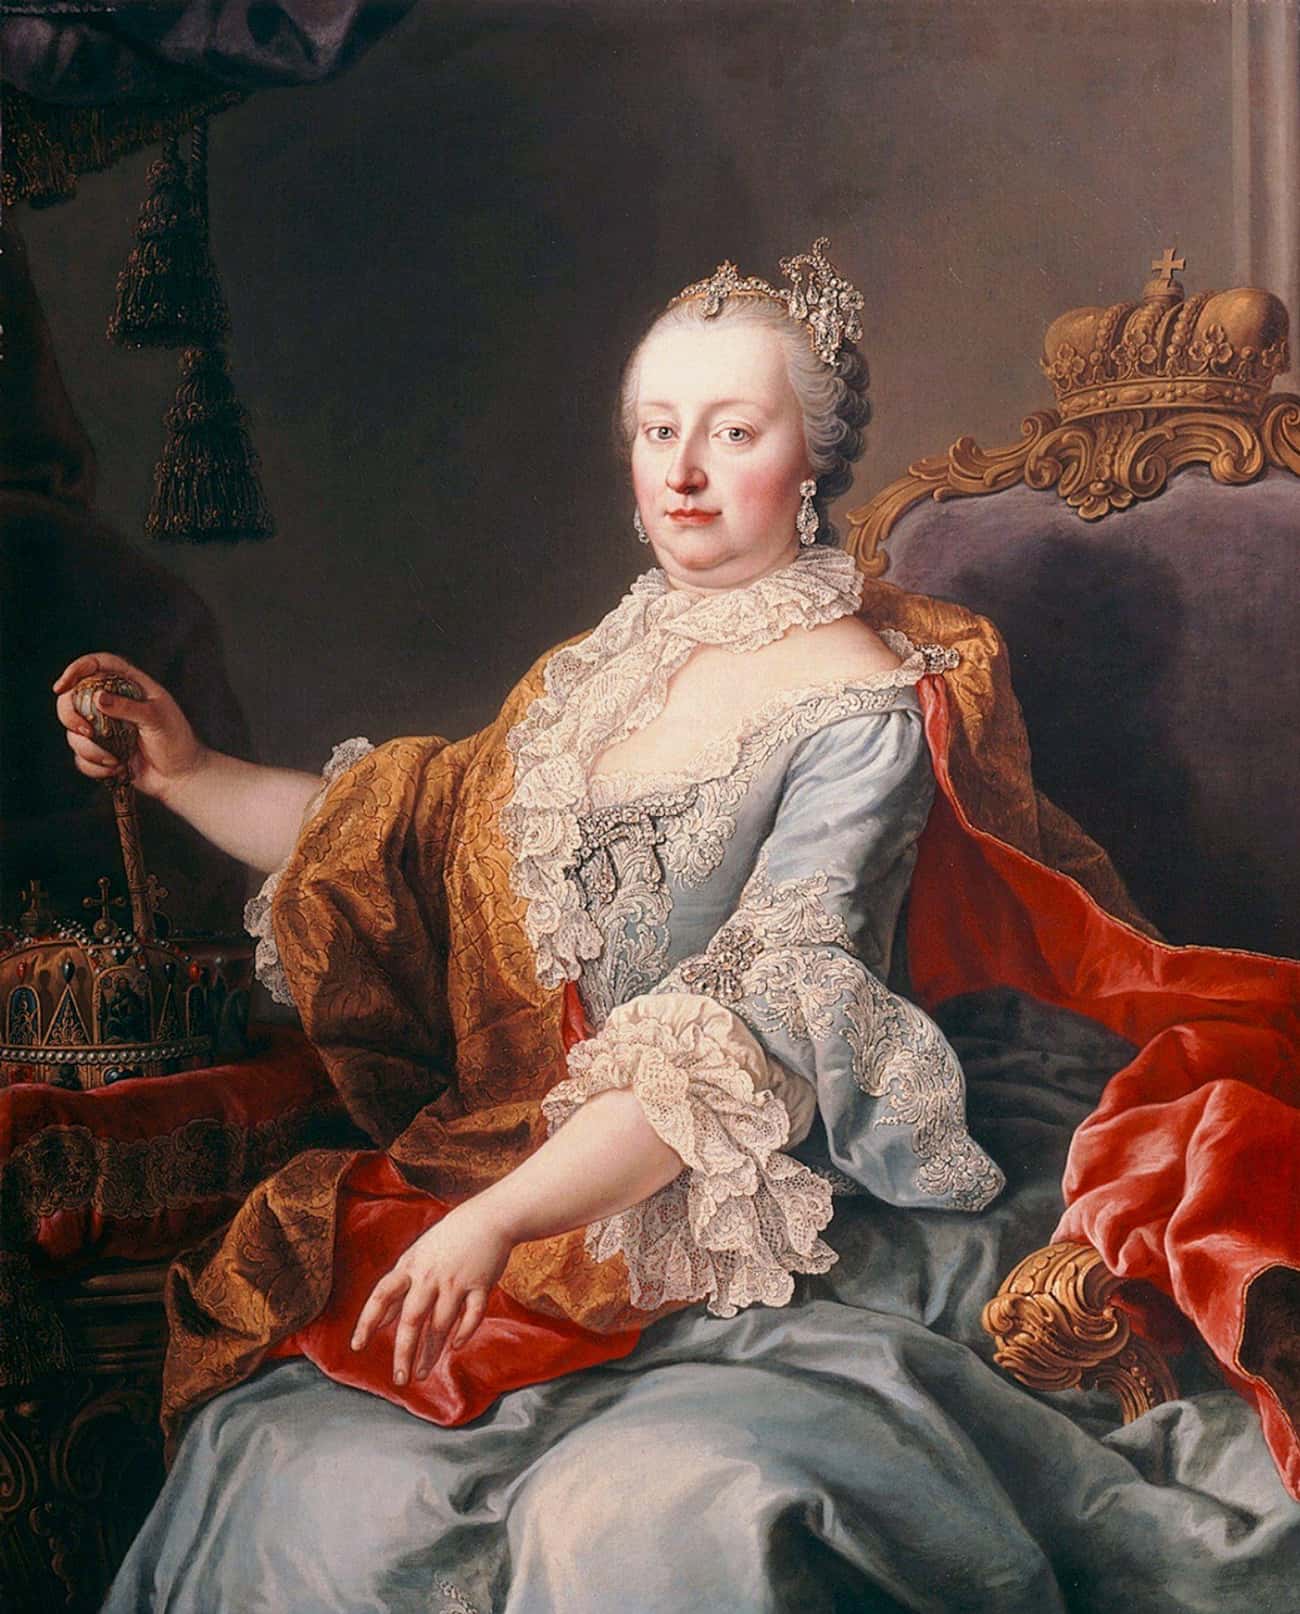 Taurus (April 20 - May 20): Empress Maria Theresa Of Austria